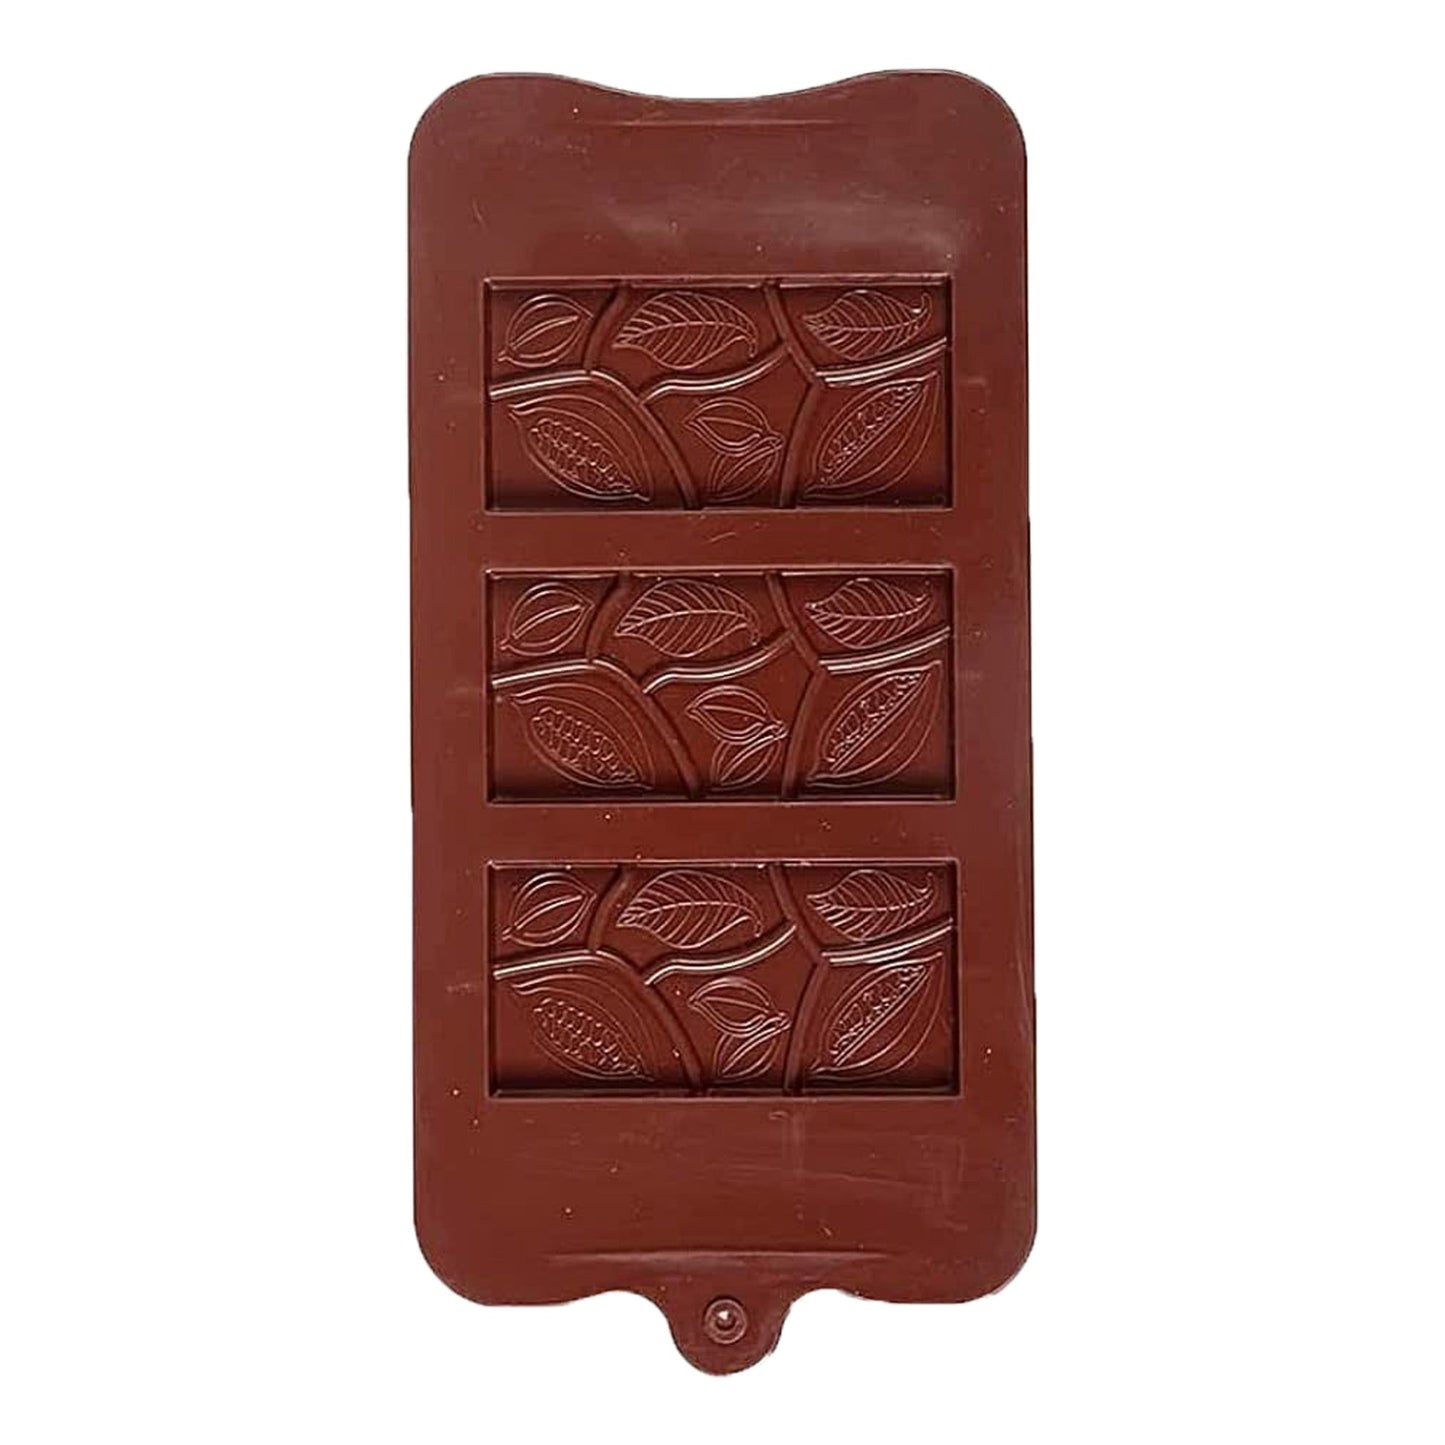 Cocoa Bean & Leaves Imprint Silicone Chocolate Bar Mold 3 Cavity